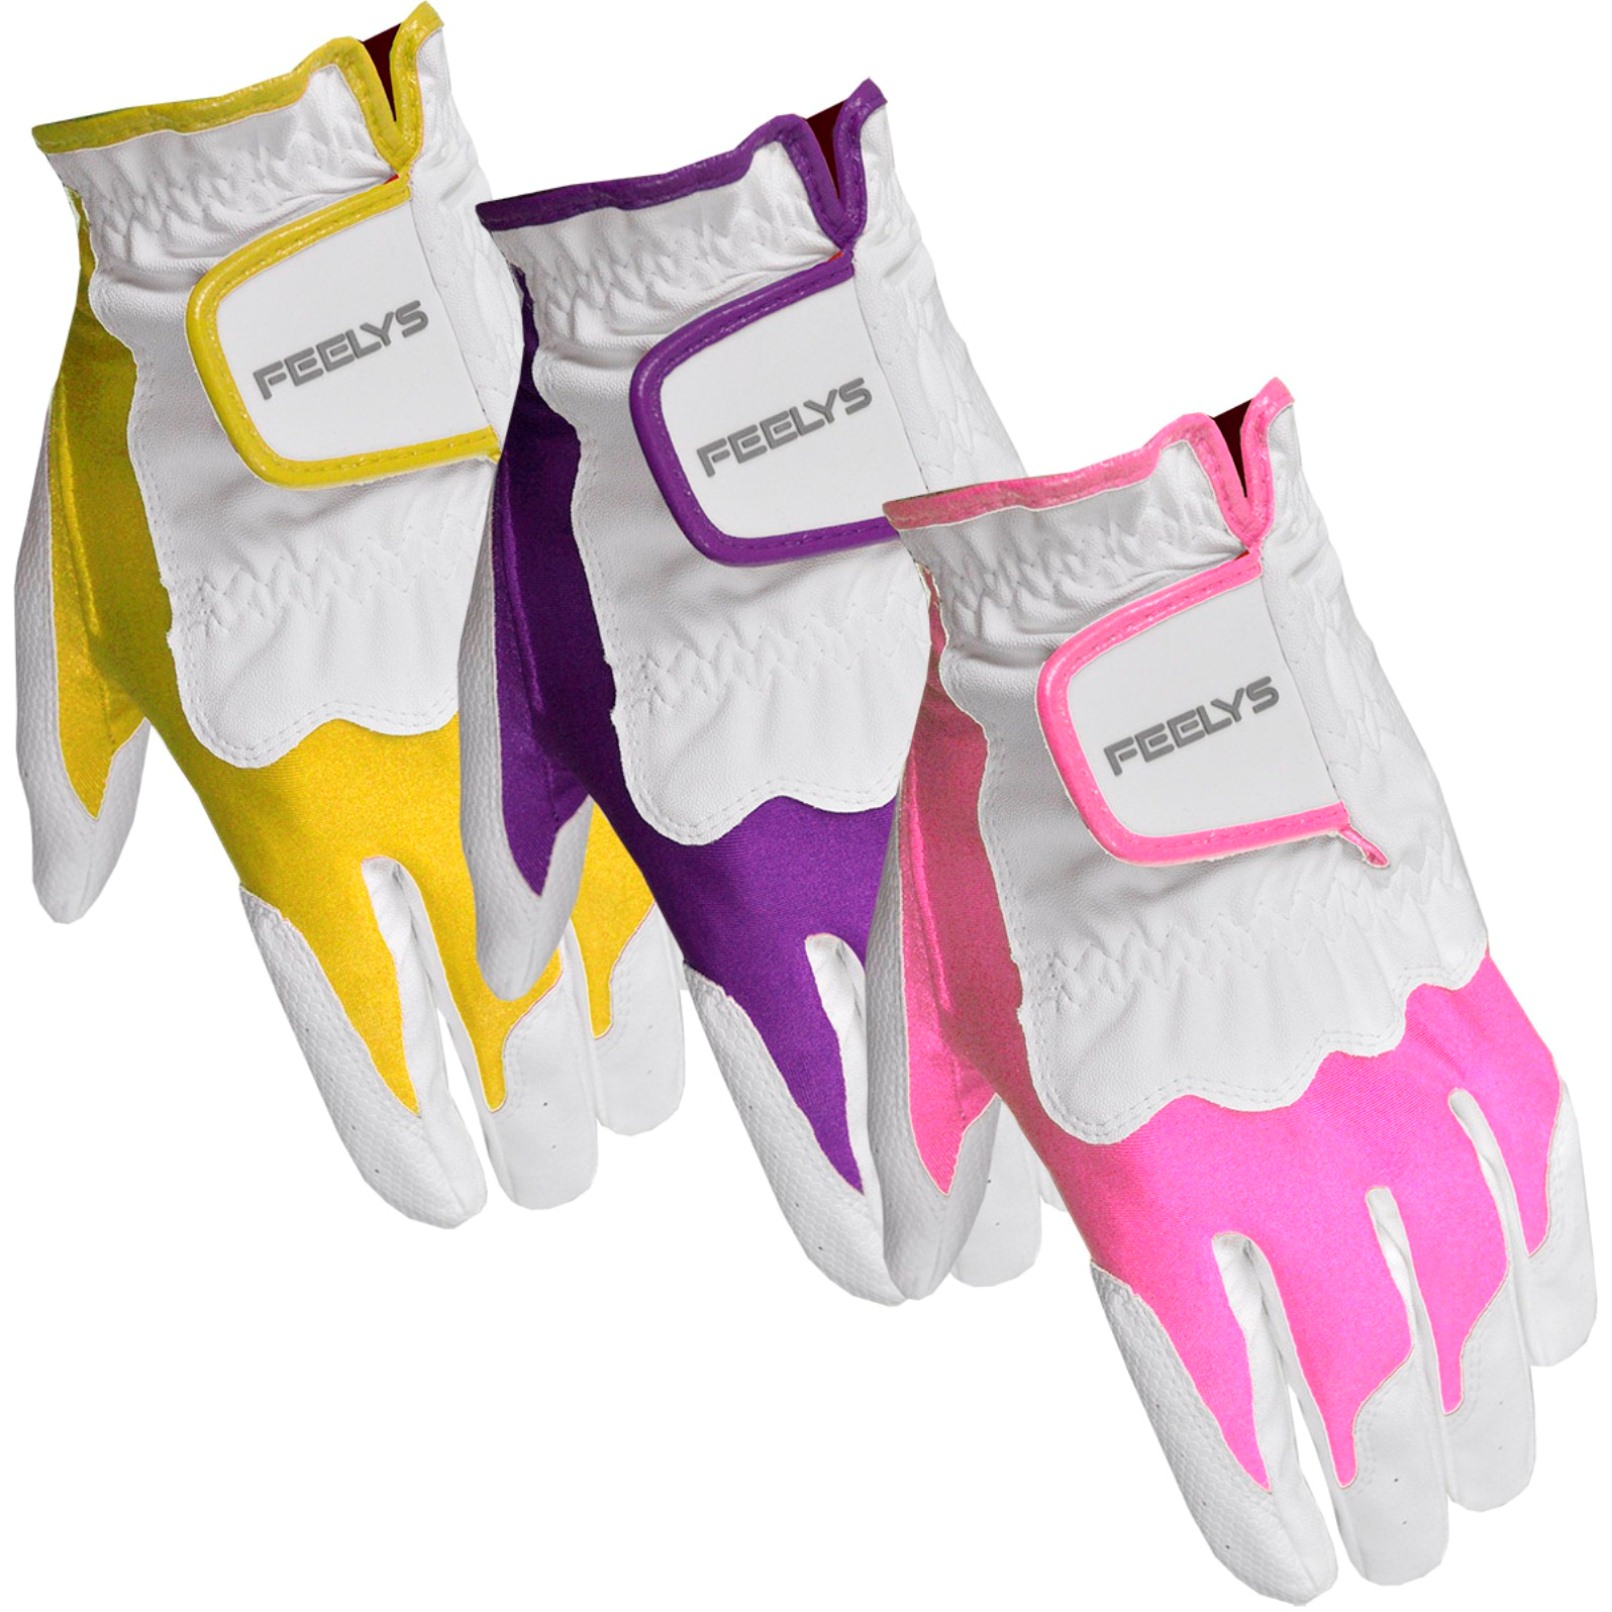 Intech Feelys Ladies LH Med-Lg/Lg Mixed Gloves